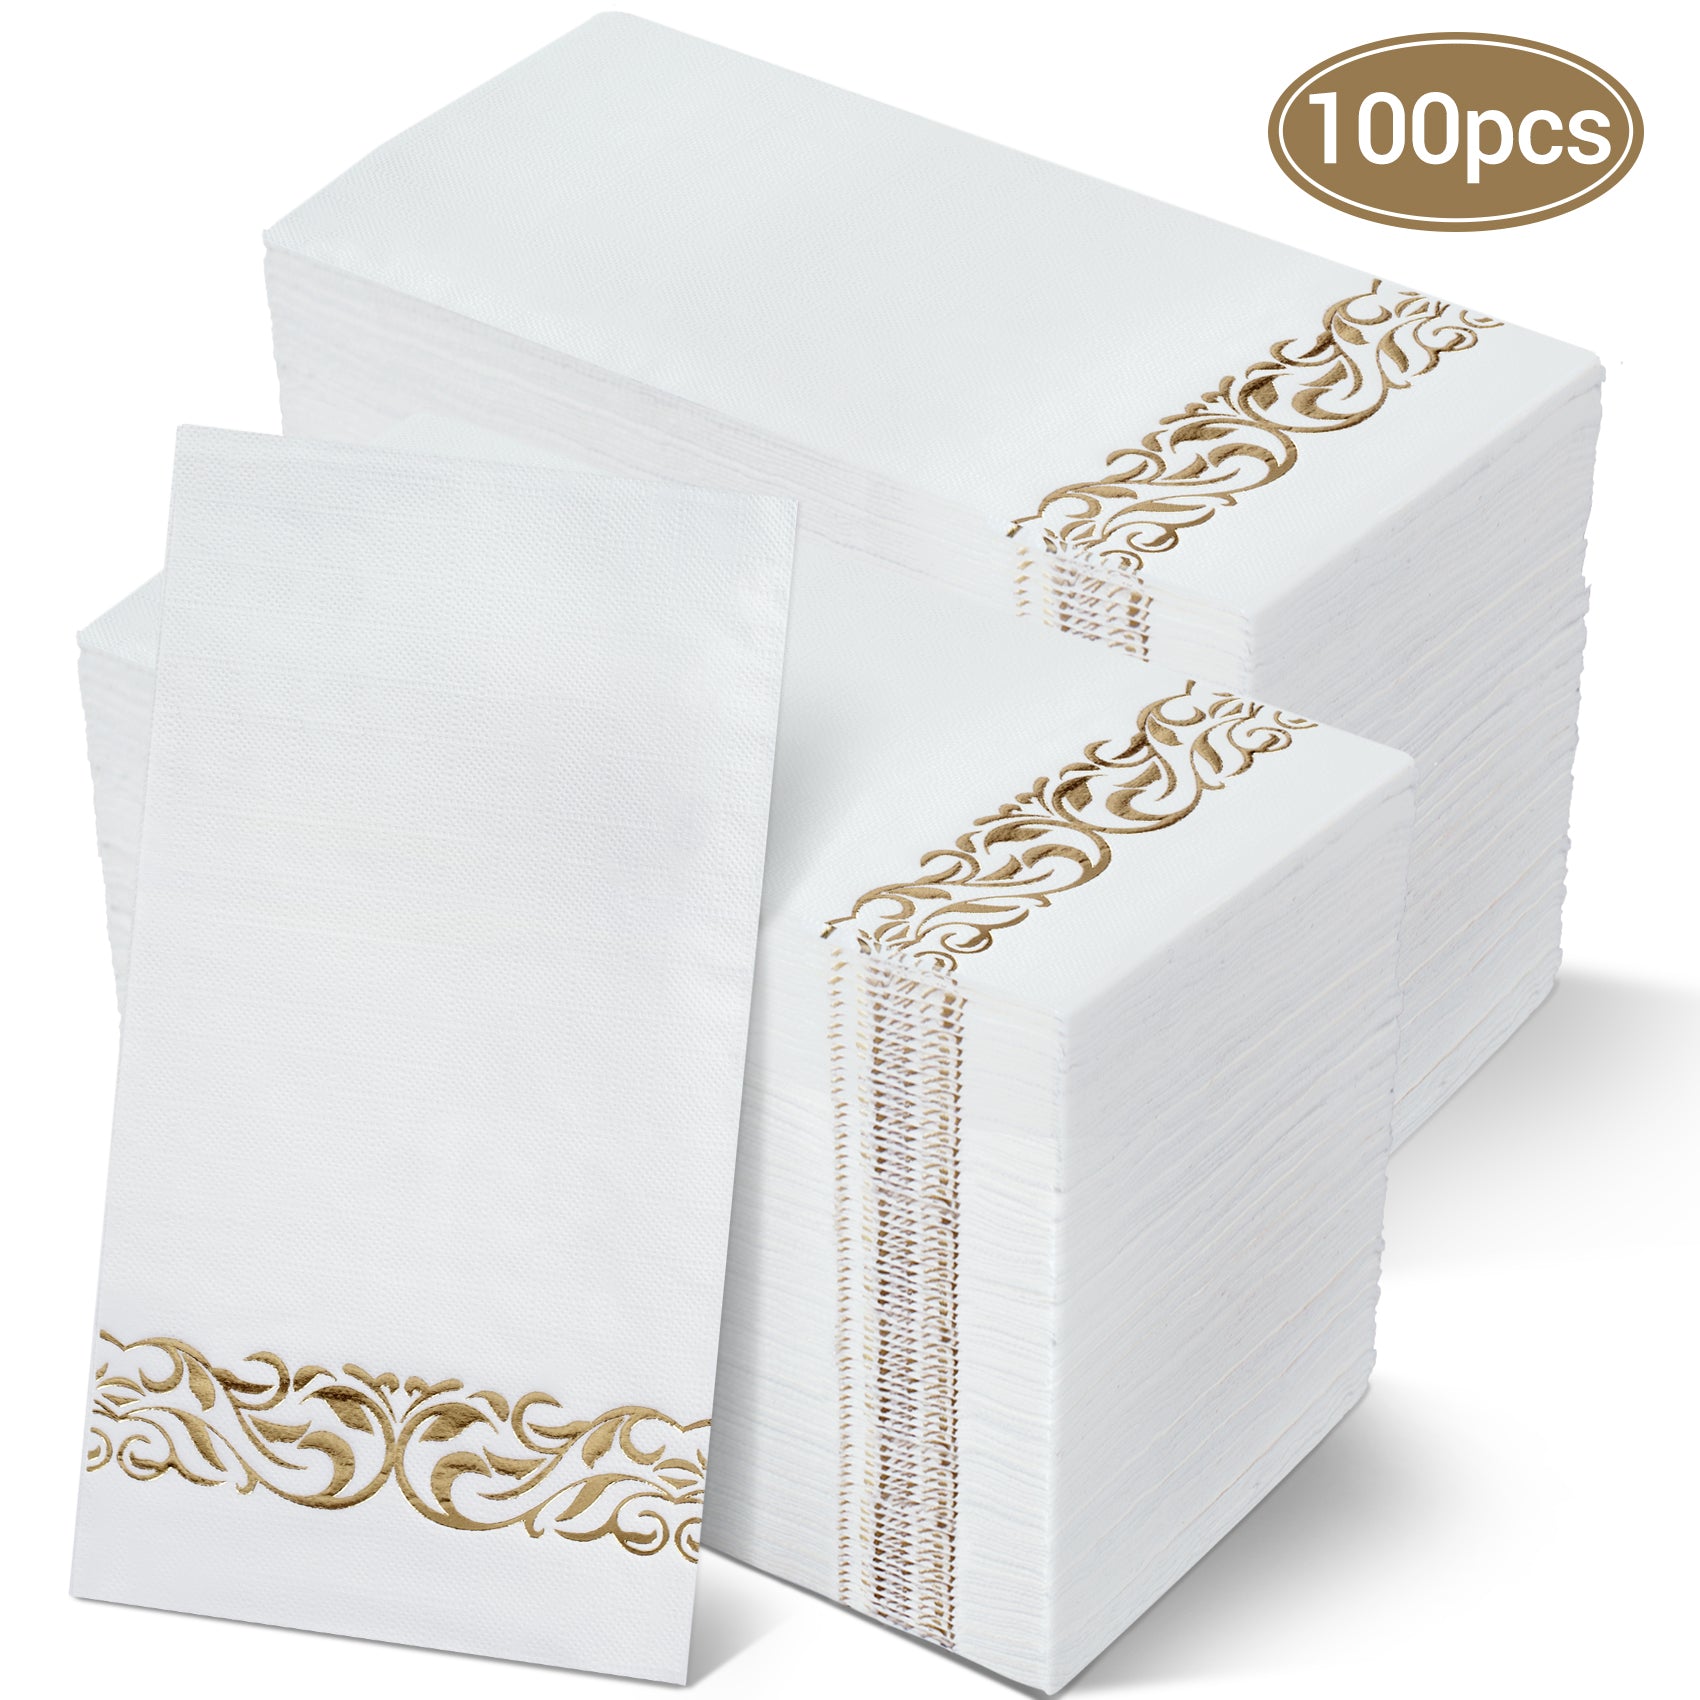 Treamon 100 Pcs Gold Linen-Feel Disposable Guest Towels Bathroom Paper